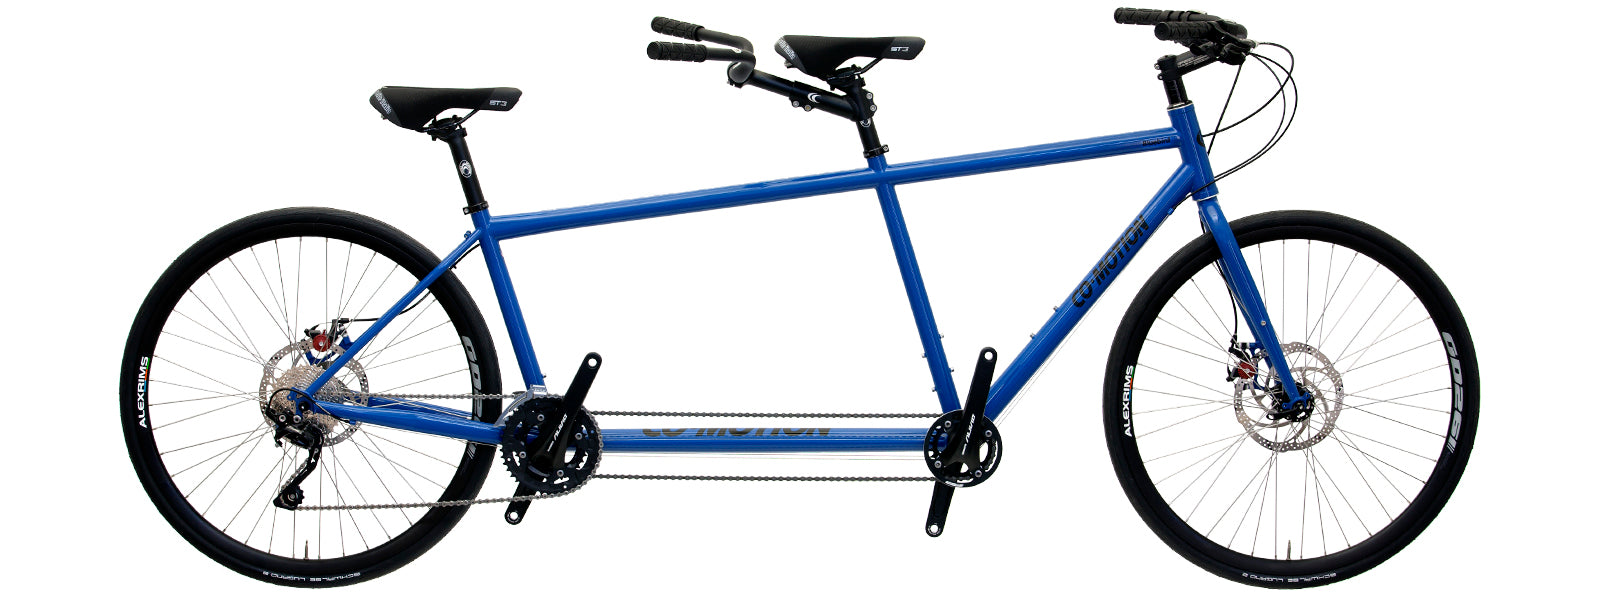 blue co-motion cycles tandem bike